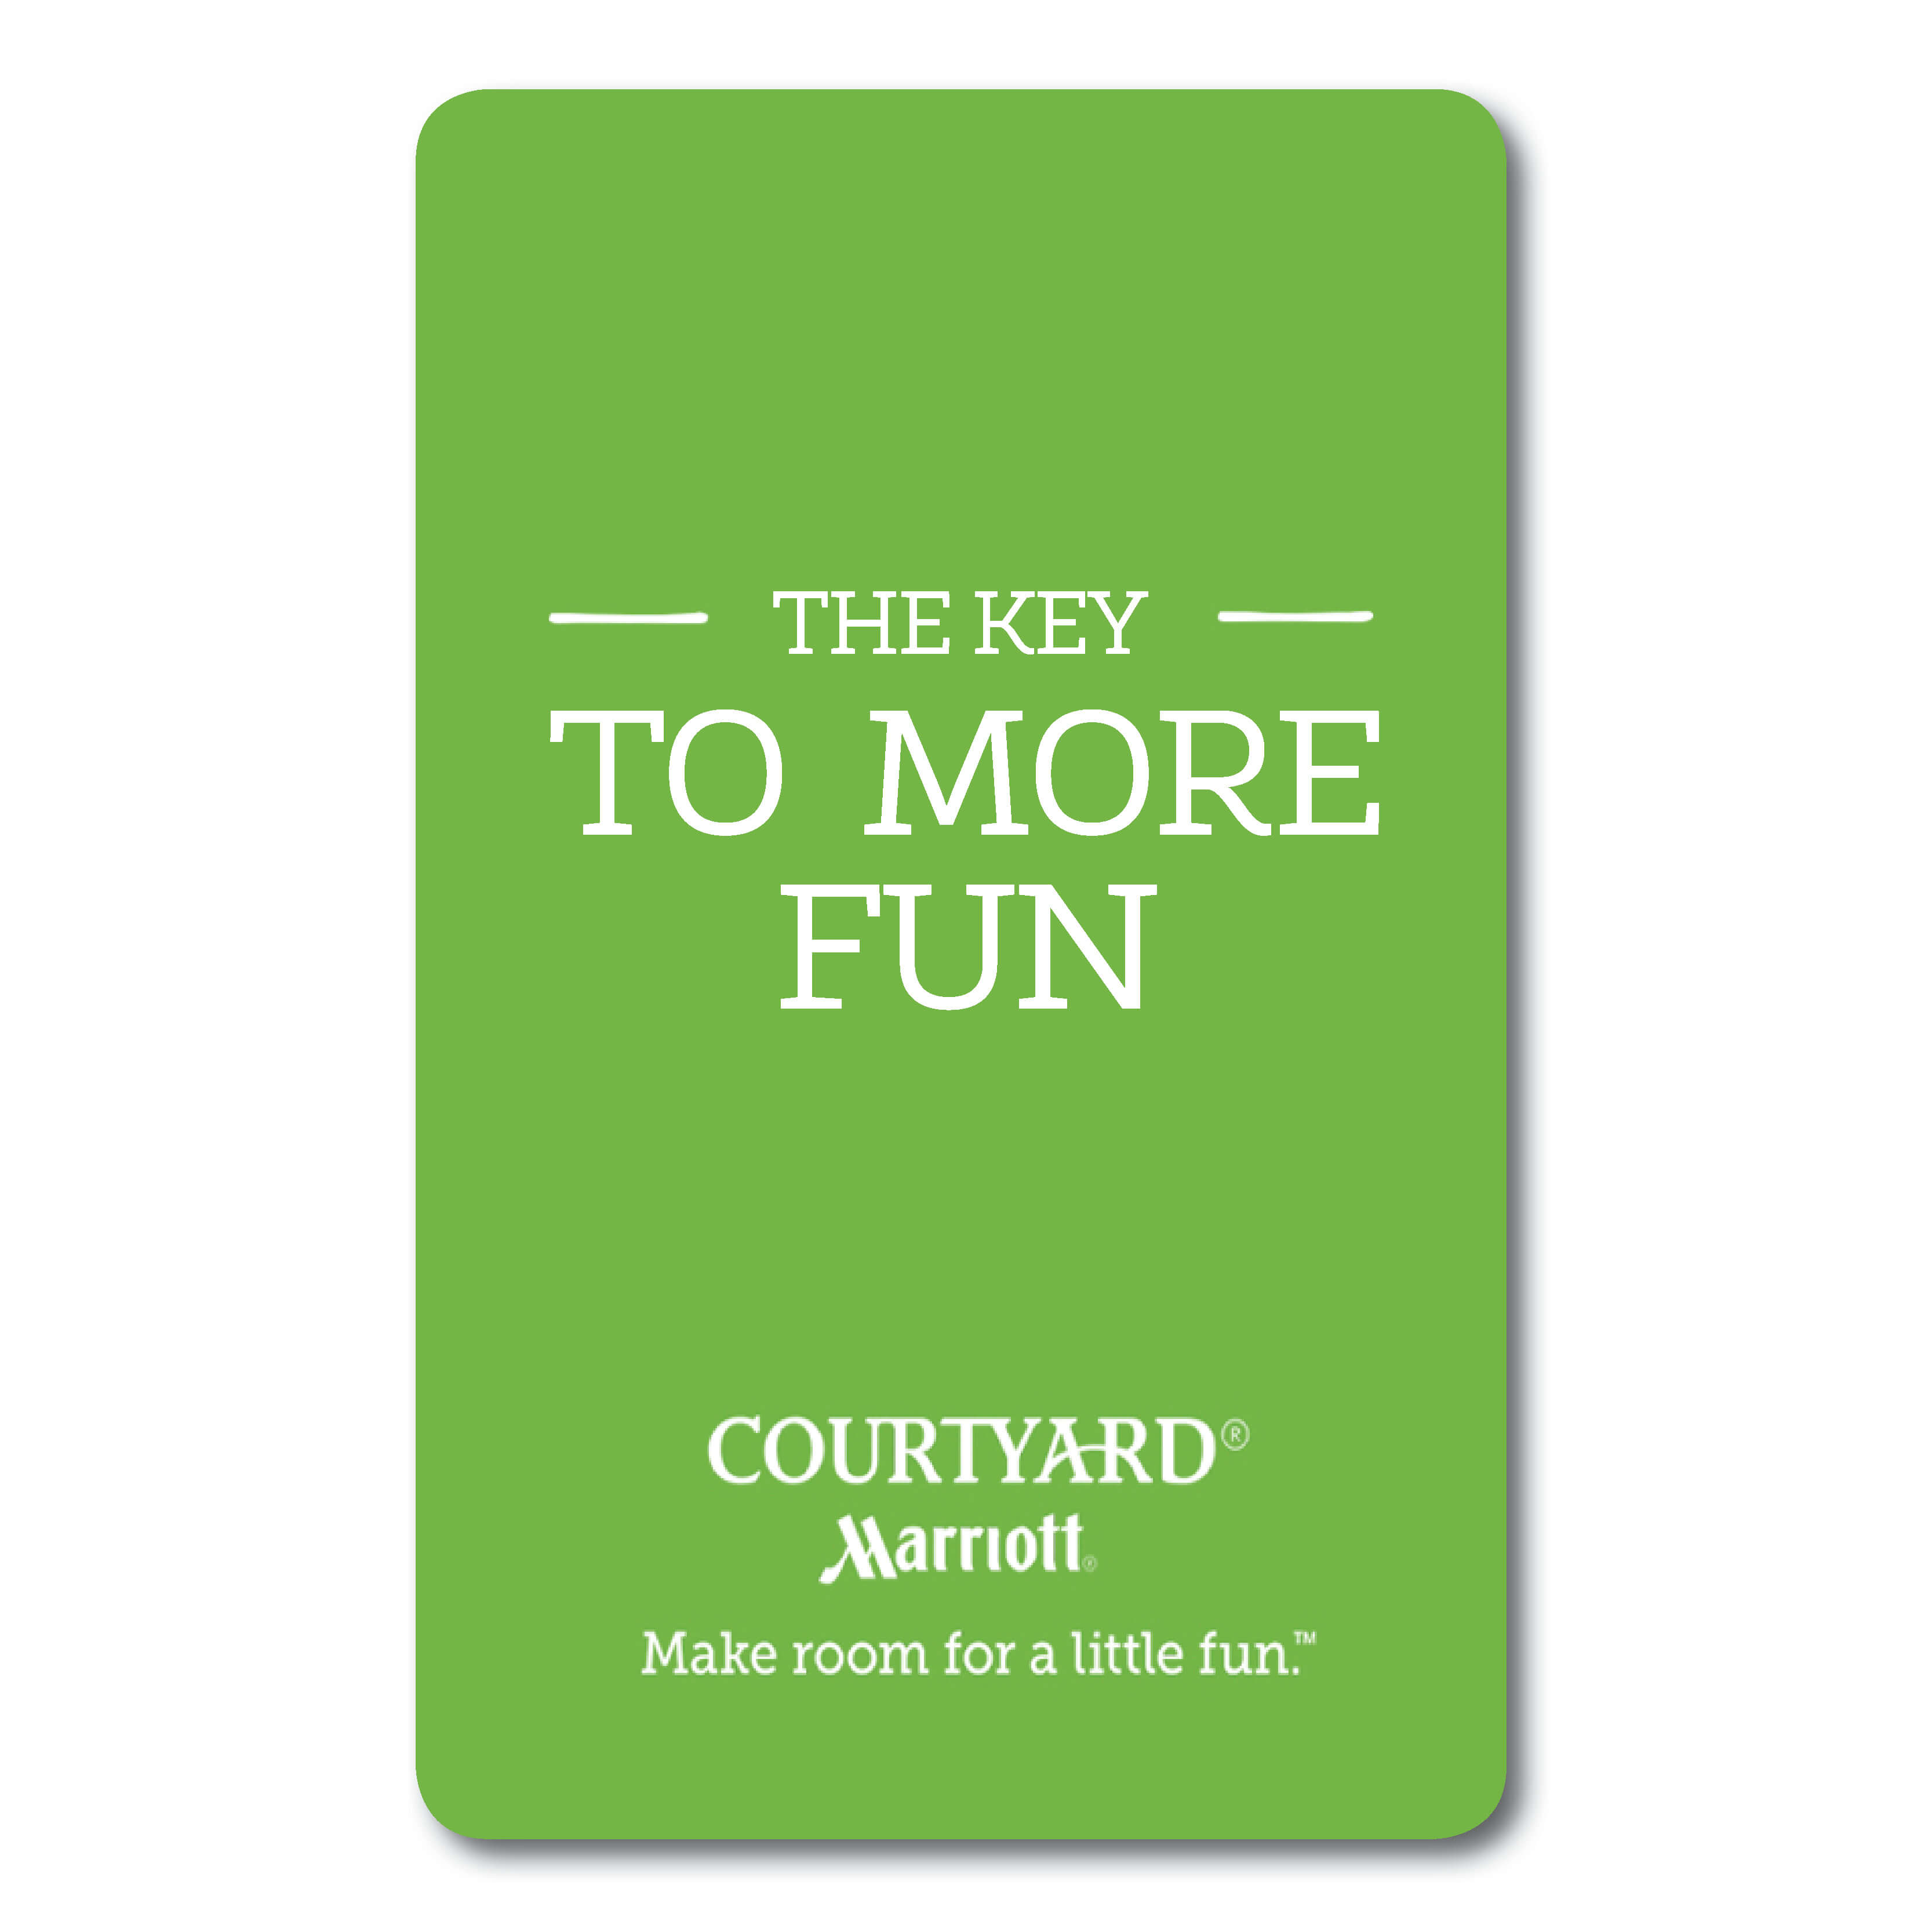 Courtyard Marriott hotel key card -The key to more fun